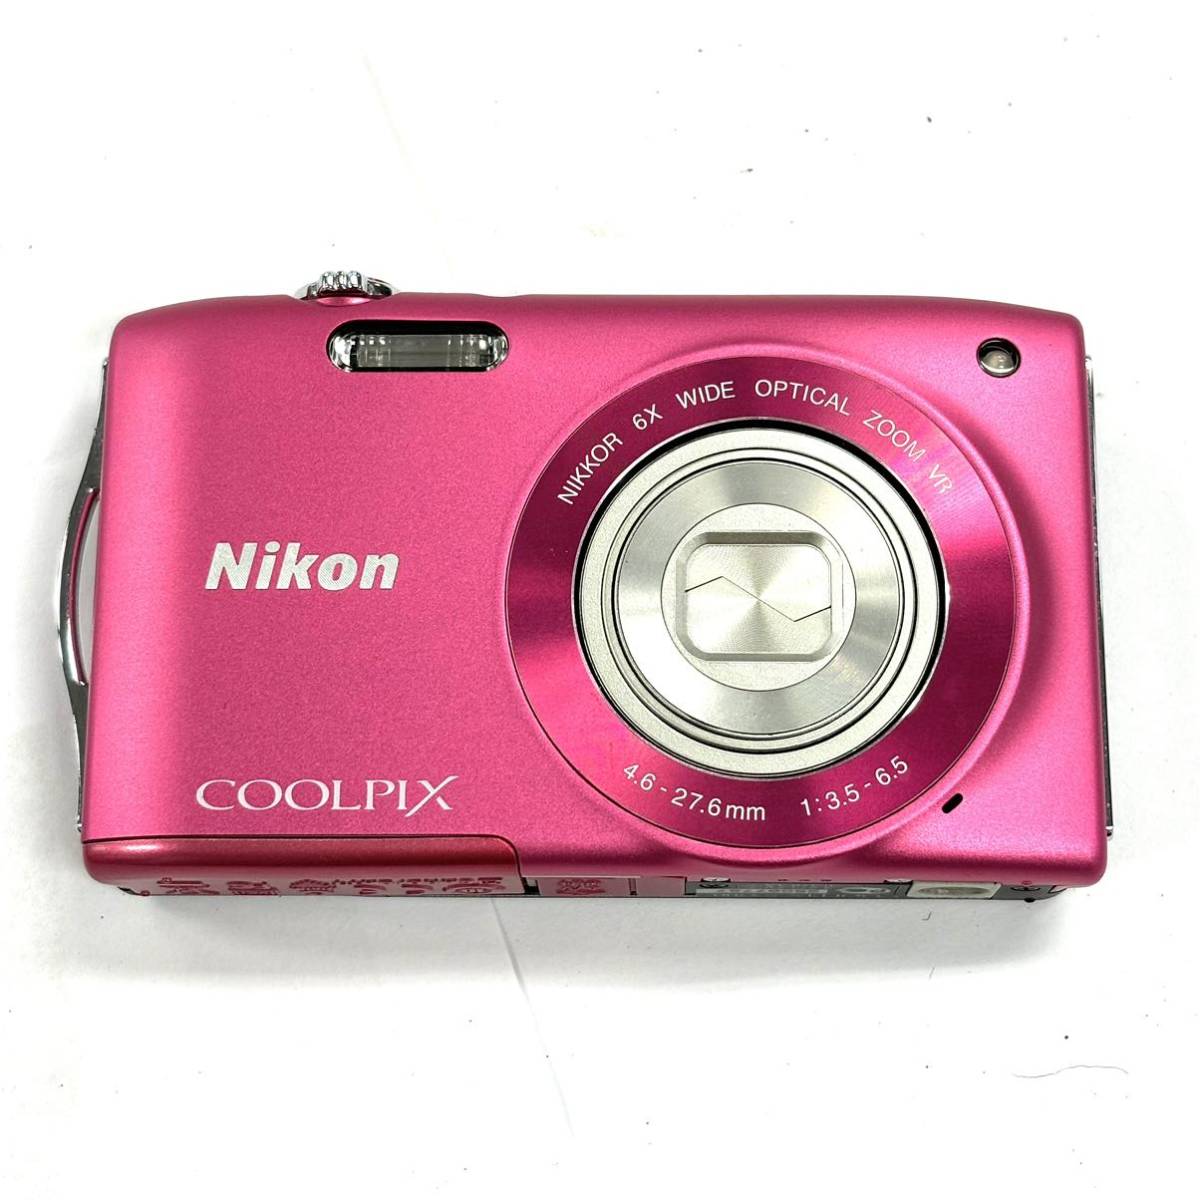 H2615 カメラ まとめ デジカメ Nikon ニコン COOLPIX S3300 NIKKOR 4.6-27.6mm 1:3.5-6.5 A10 4.6-23.0mm 1:3.2-6.5 ジャンク品 中古_画像8